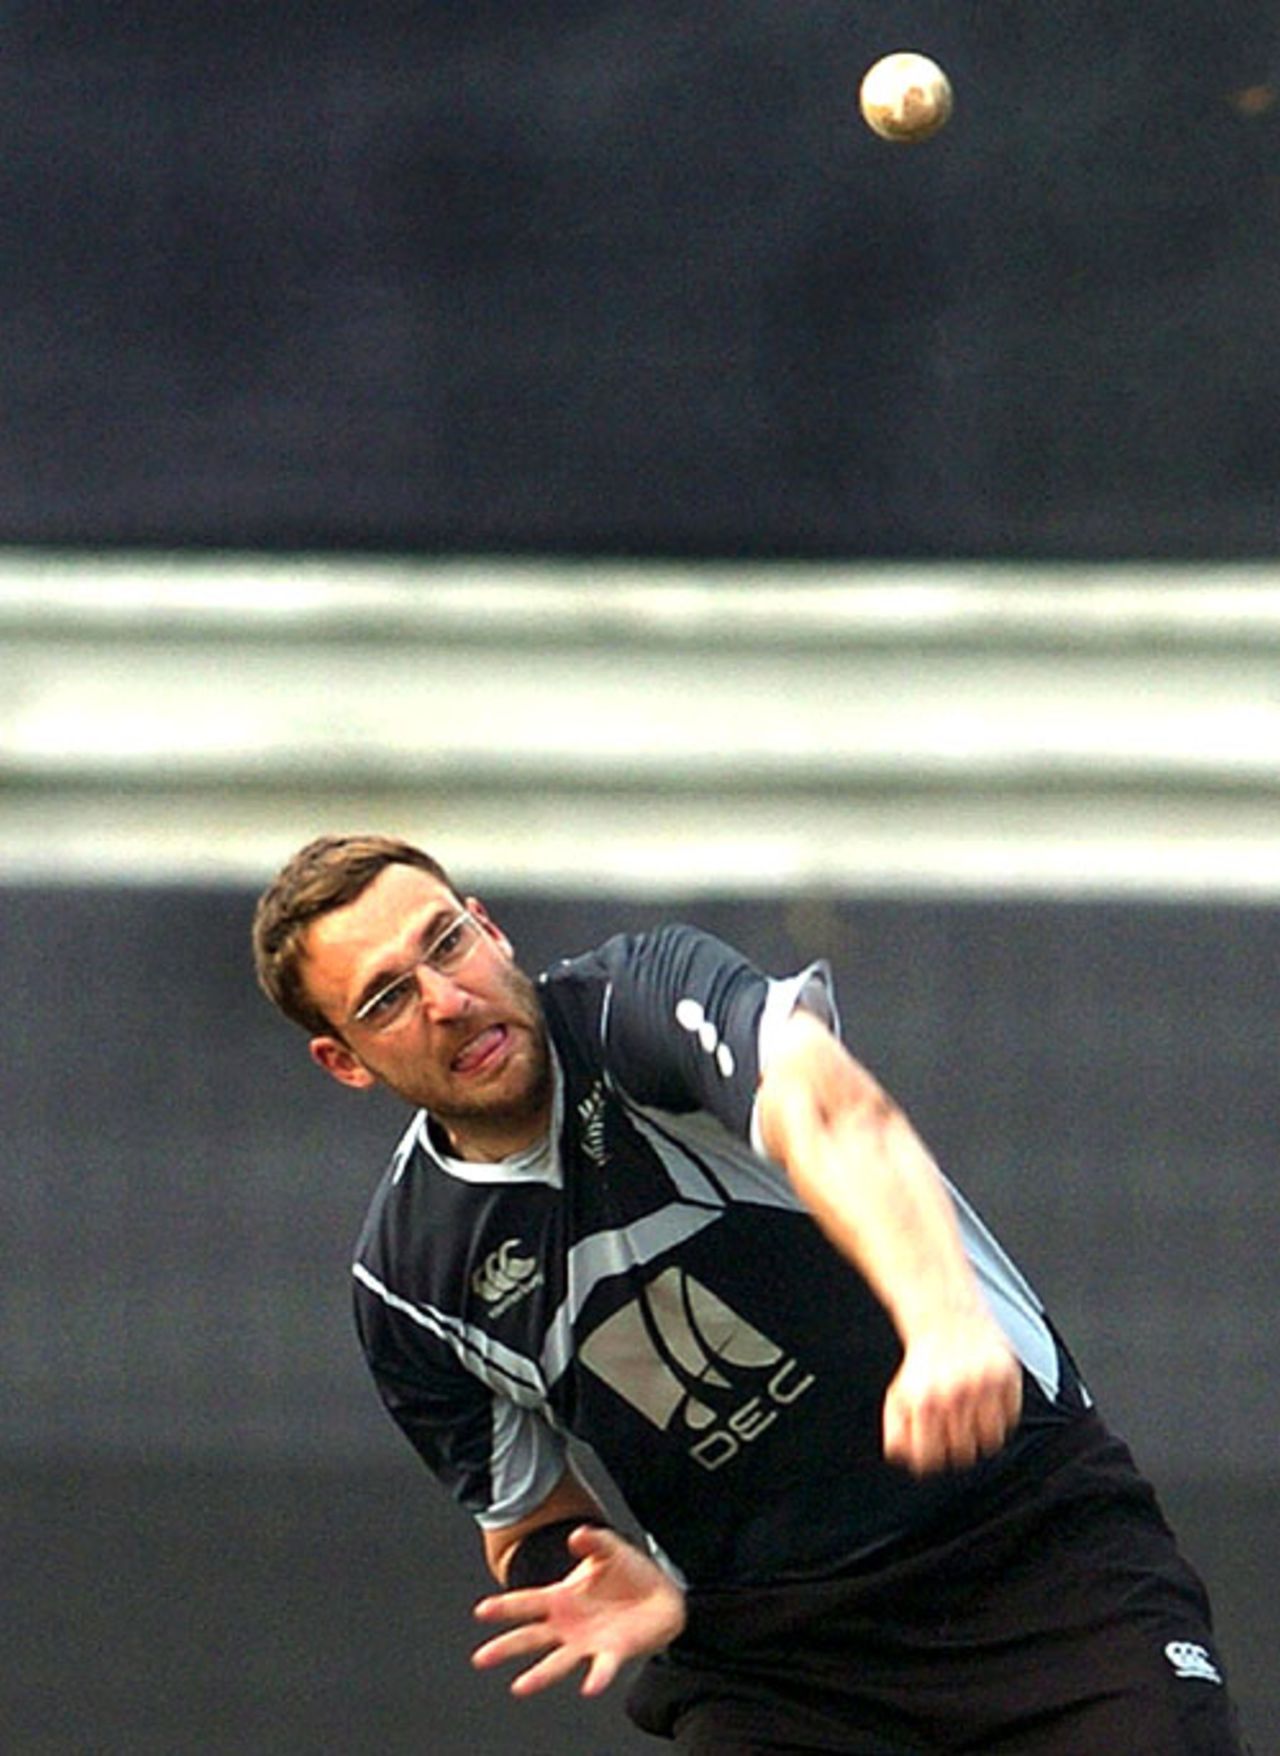 Daniel Vettori conceded 48 off his nine overs, Bangladesh v New Zealand, 1st ODI, Mirpur, October 9, 2008